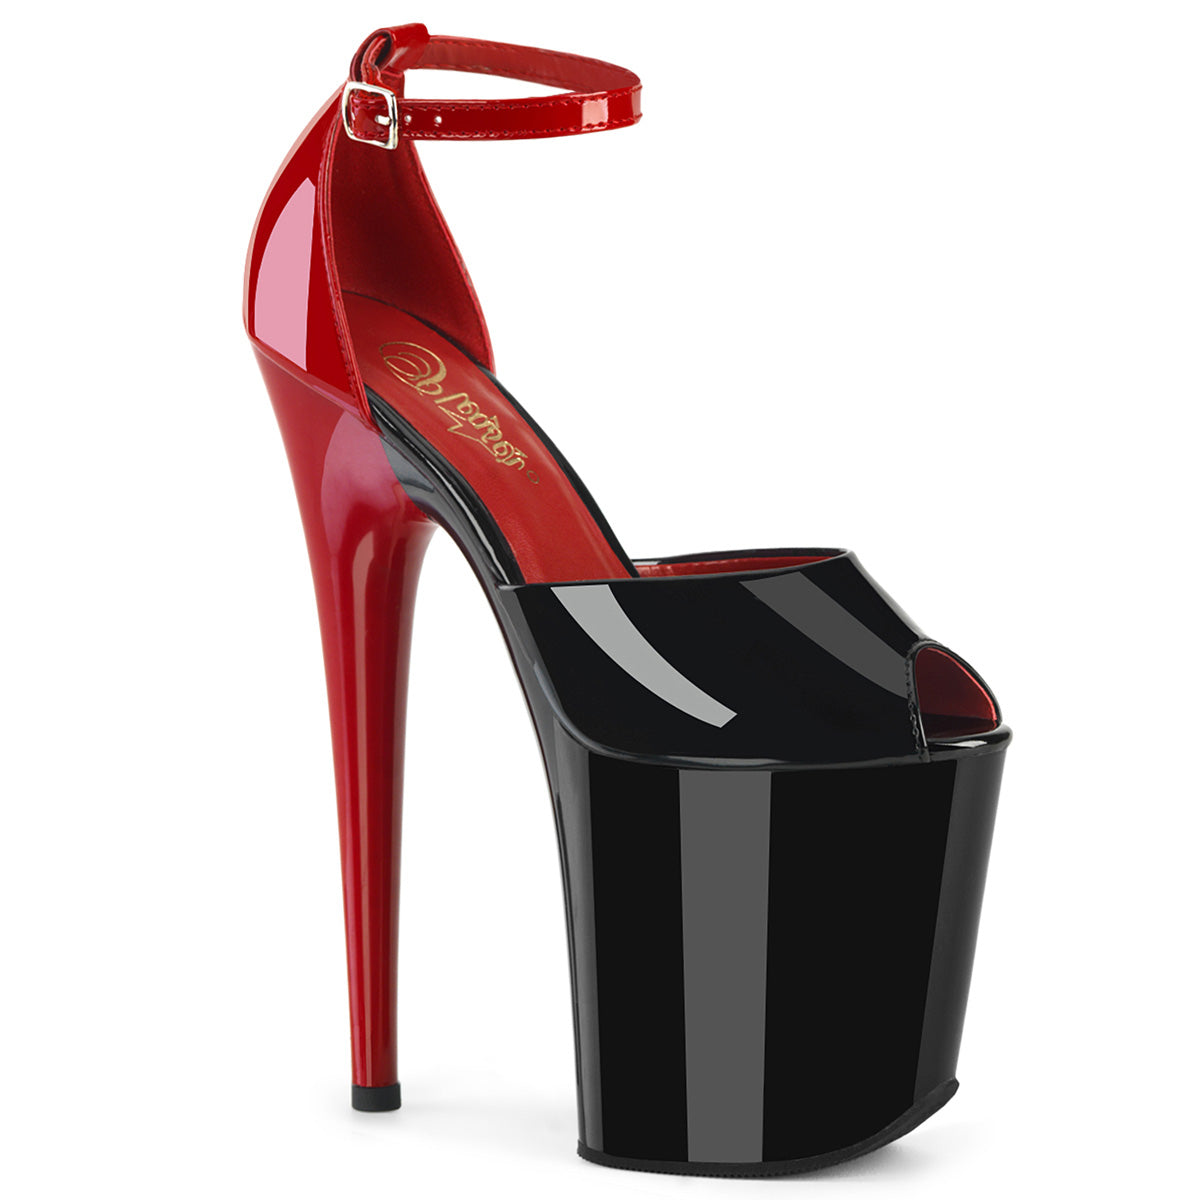 FLAMINGO-868 - Black-Red Patent Heels